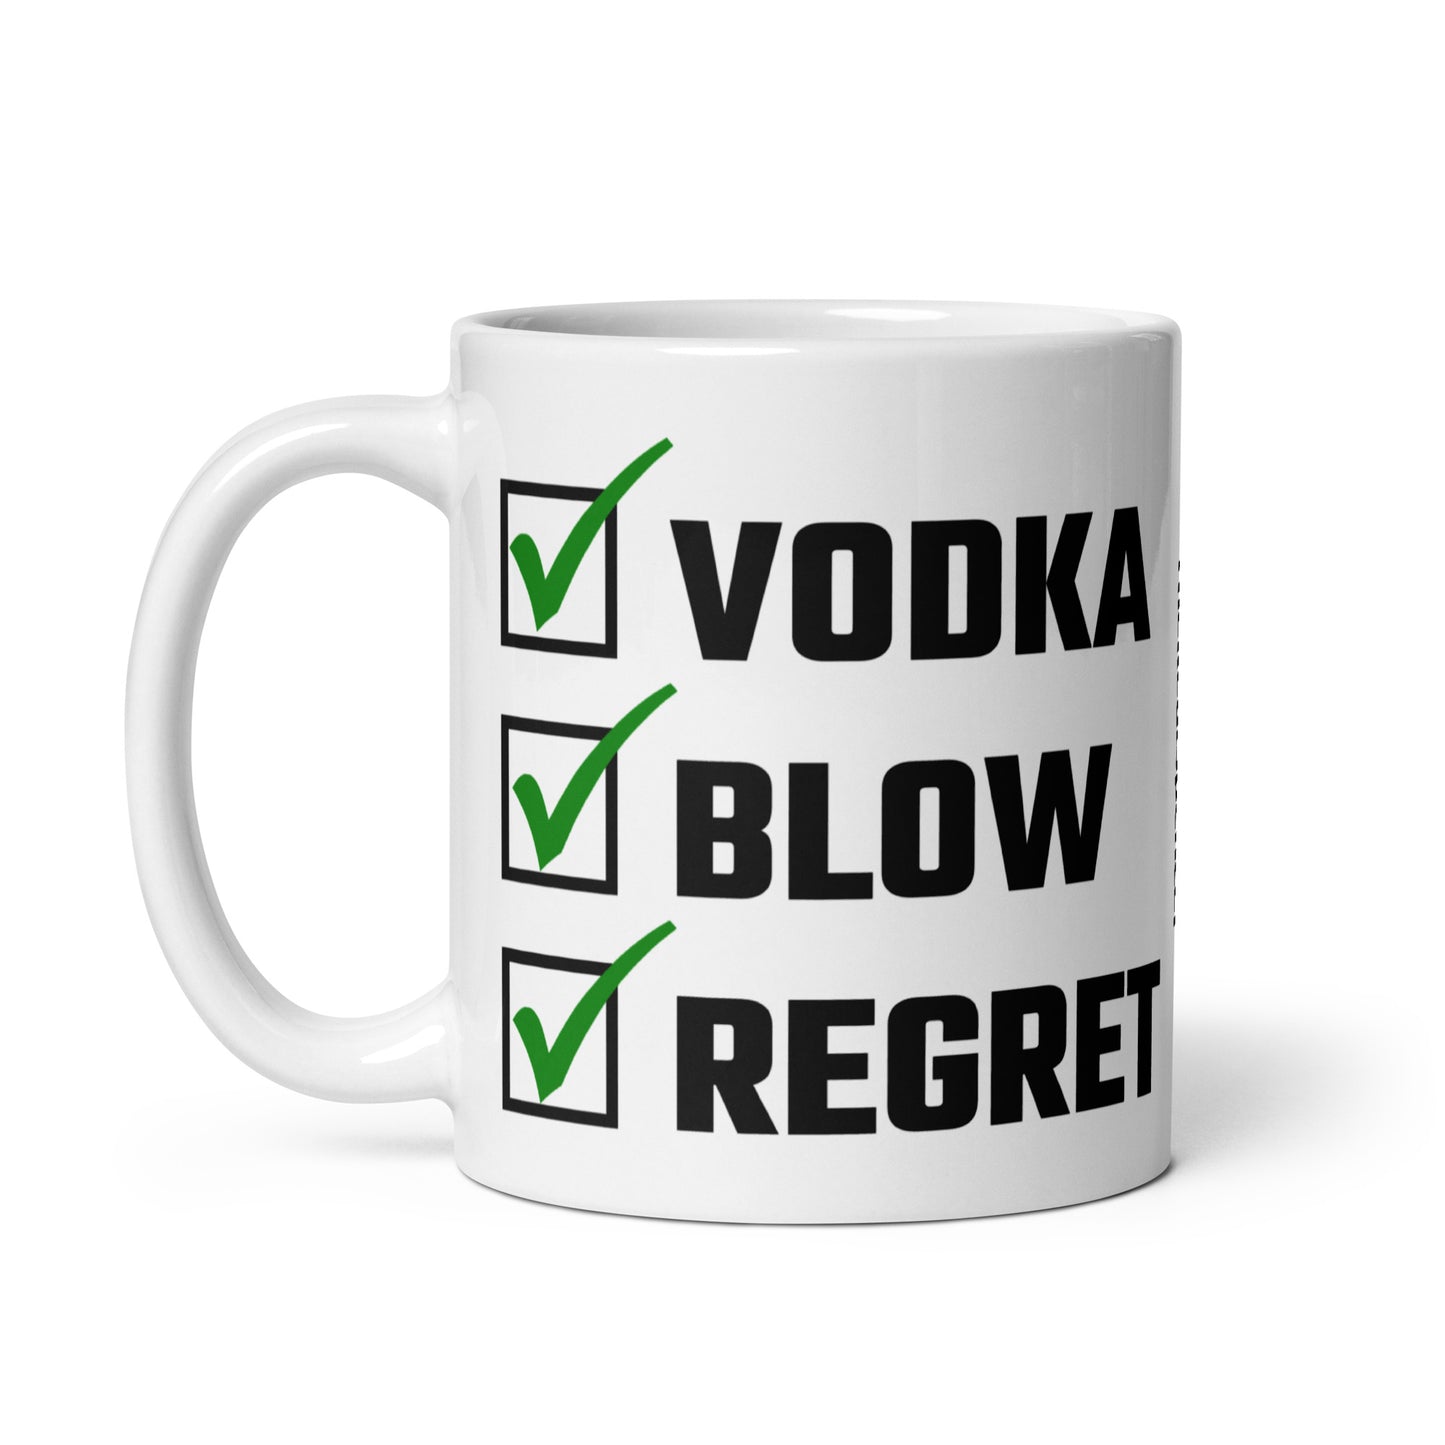 Vodka, Blow, Regret Mug